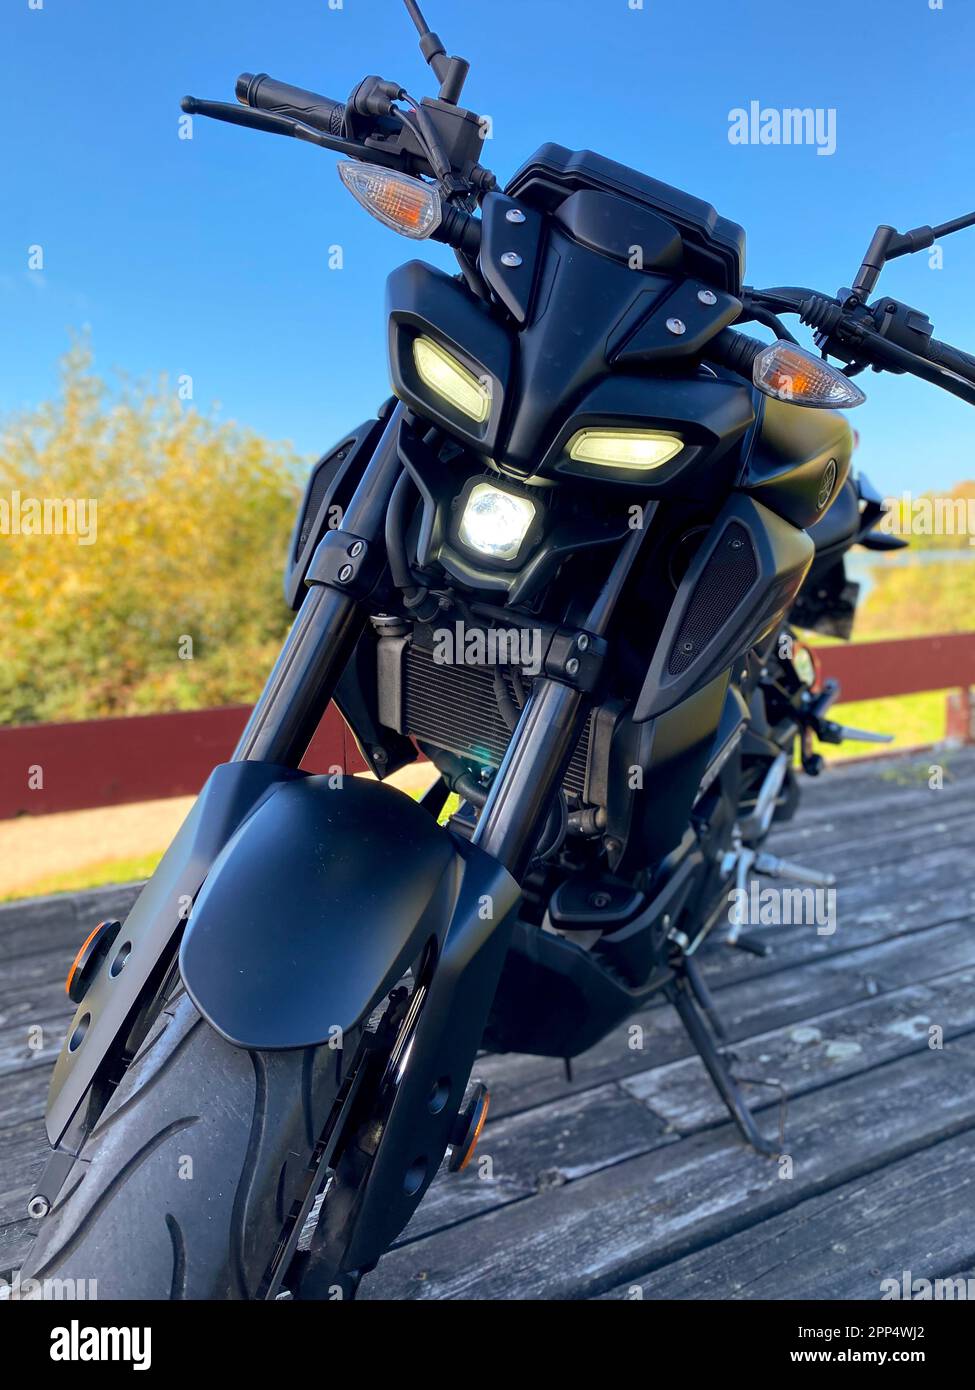 Grigny, Frankreich. November 08. 2022. Motorradmodell aus dem Jahre 2020 mit 125 Kubikzentimetern Verdrängung. Yamaha MT 125 Motorrad. Stockfoto